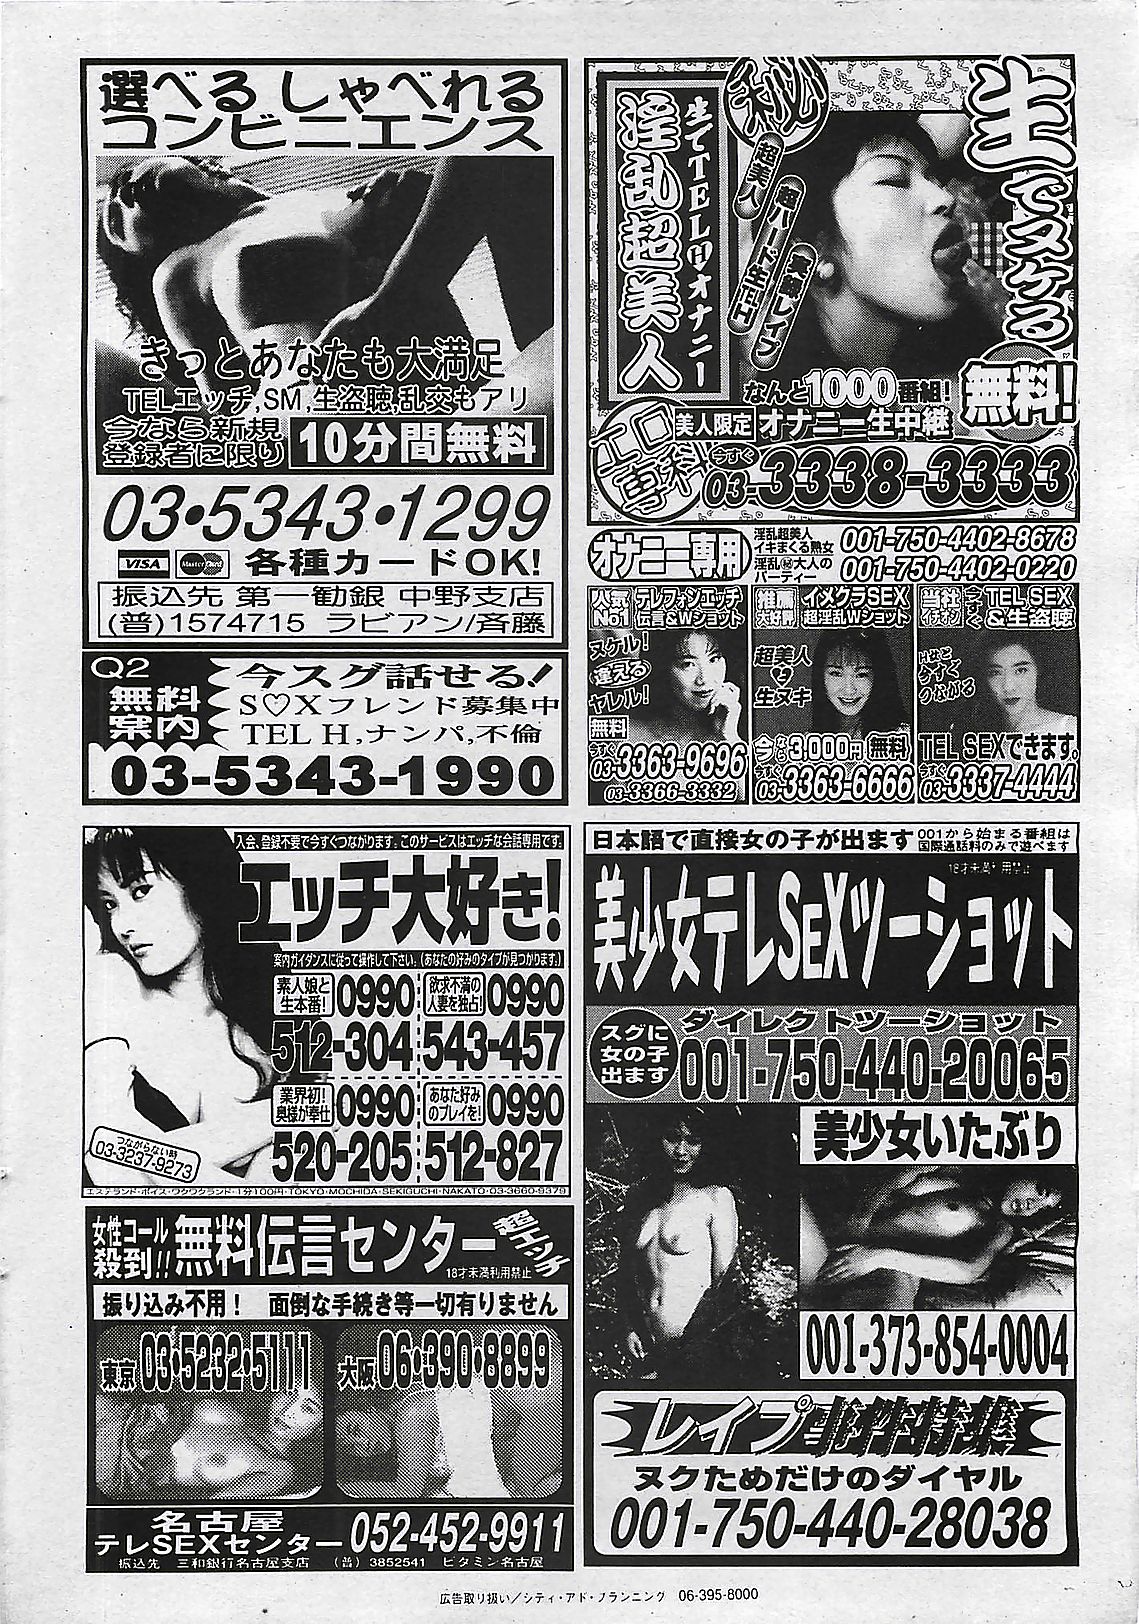 COMIC PINE 1998-07 (雑誌) COMIC パイン 1998年07月号